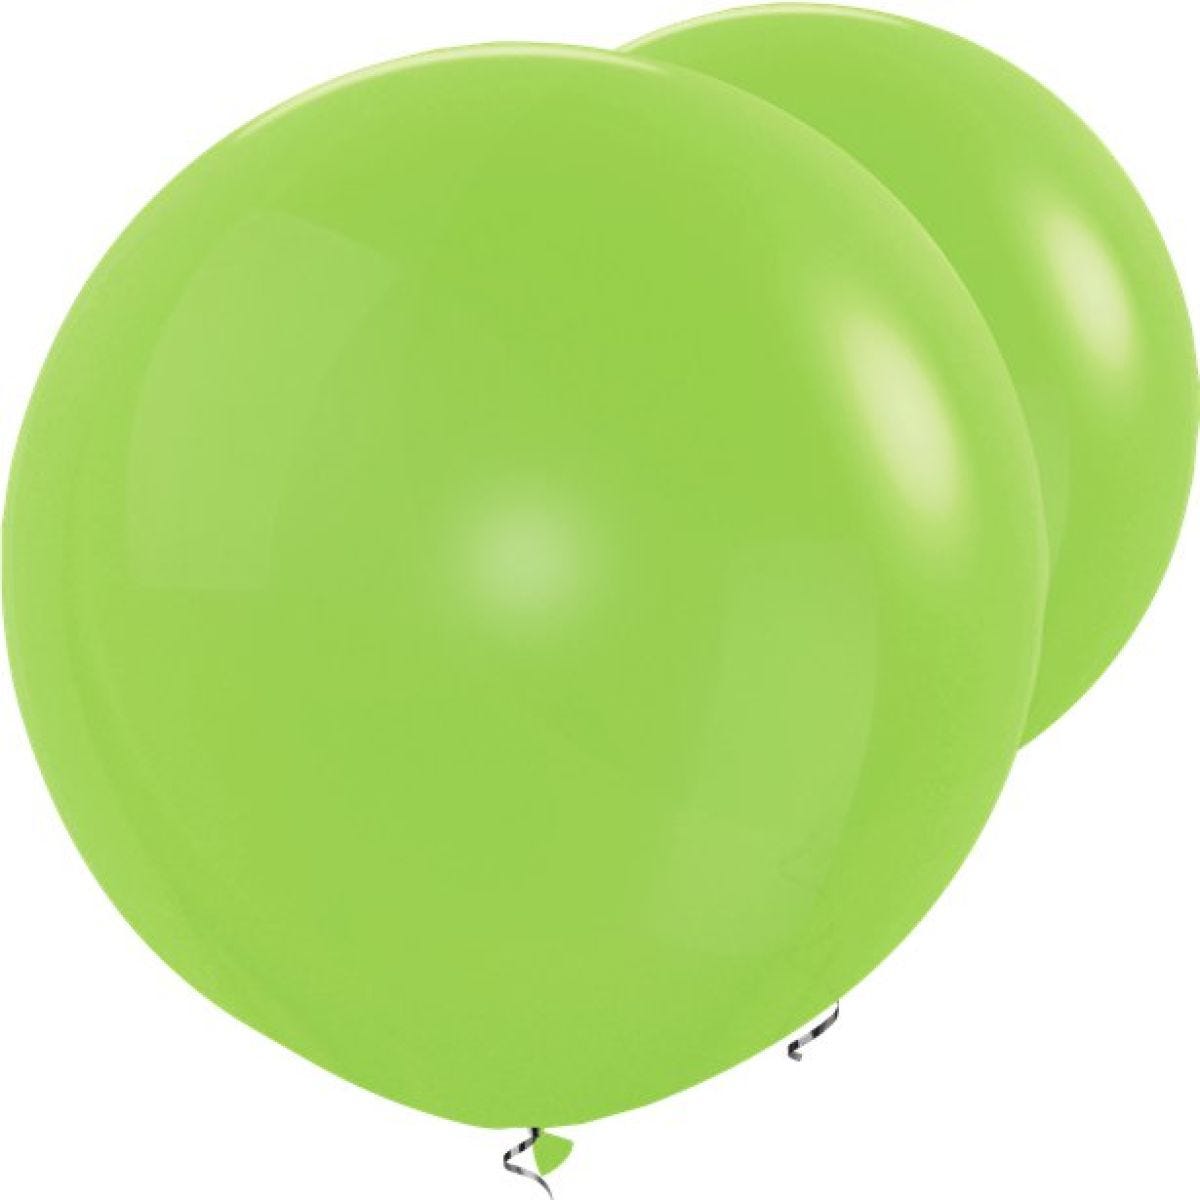 Lime Green Giant Balloons - 36" Latex